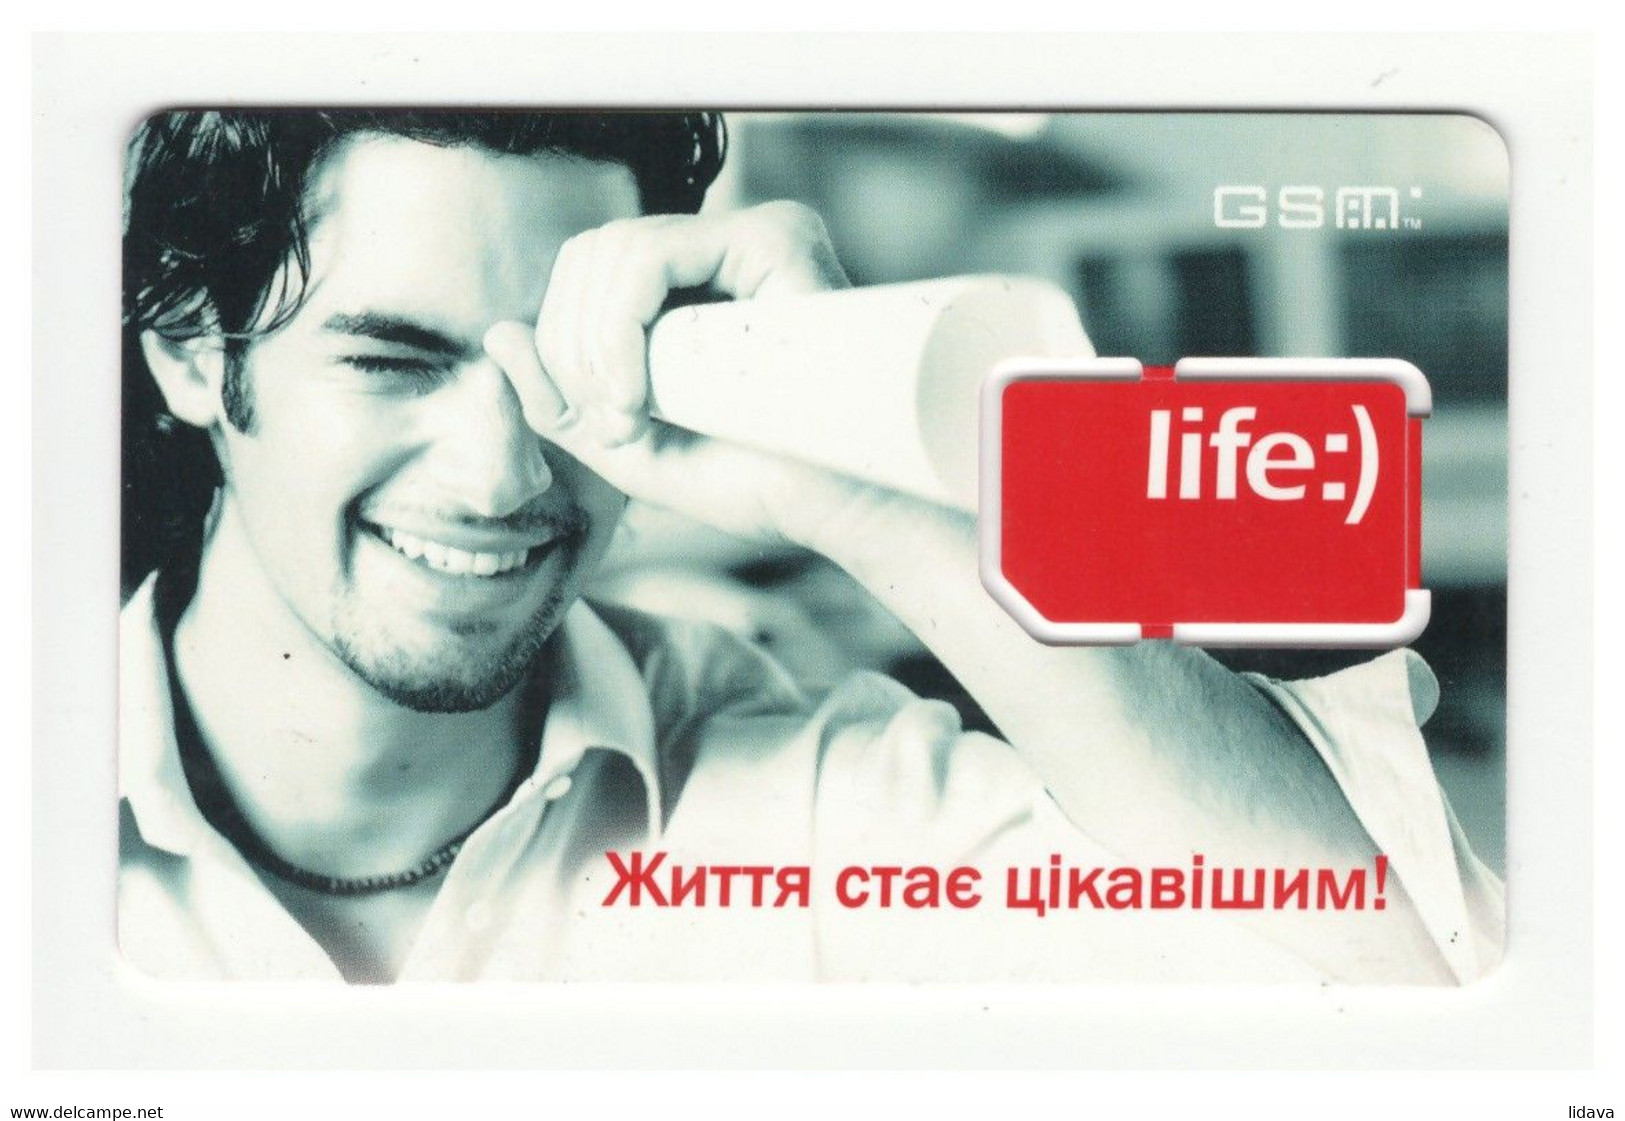 Unused SIM Chip GSM Phone Card Life:) Type 2 UKRAINE - Ukraine